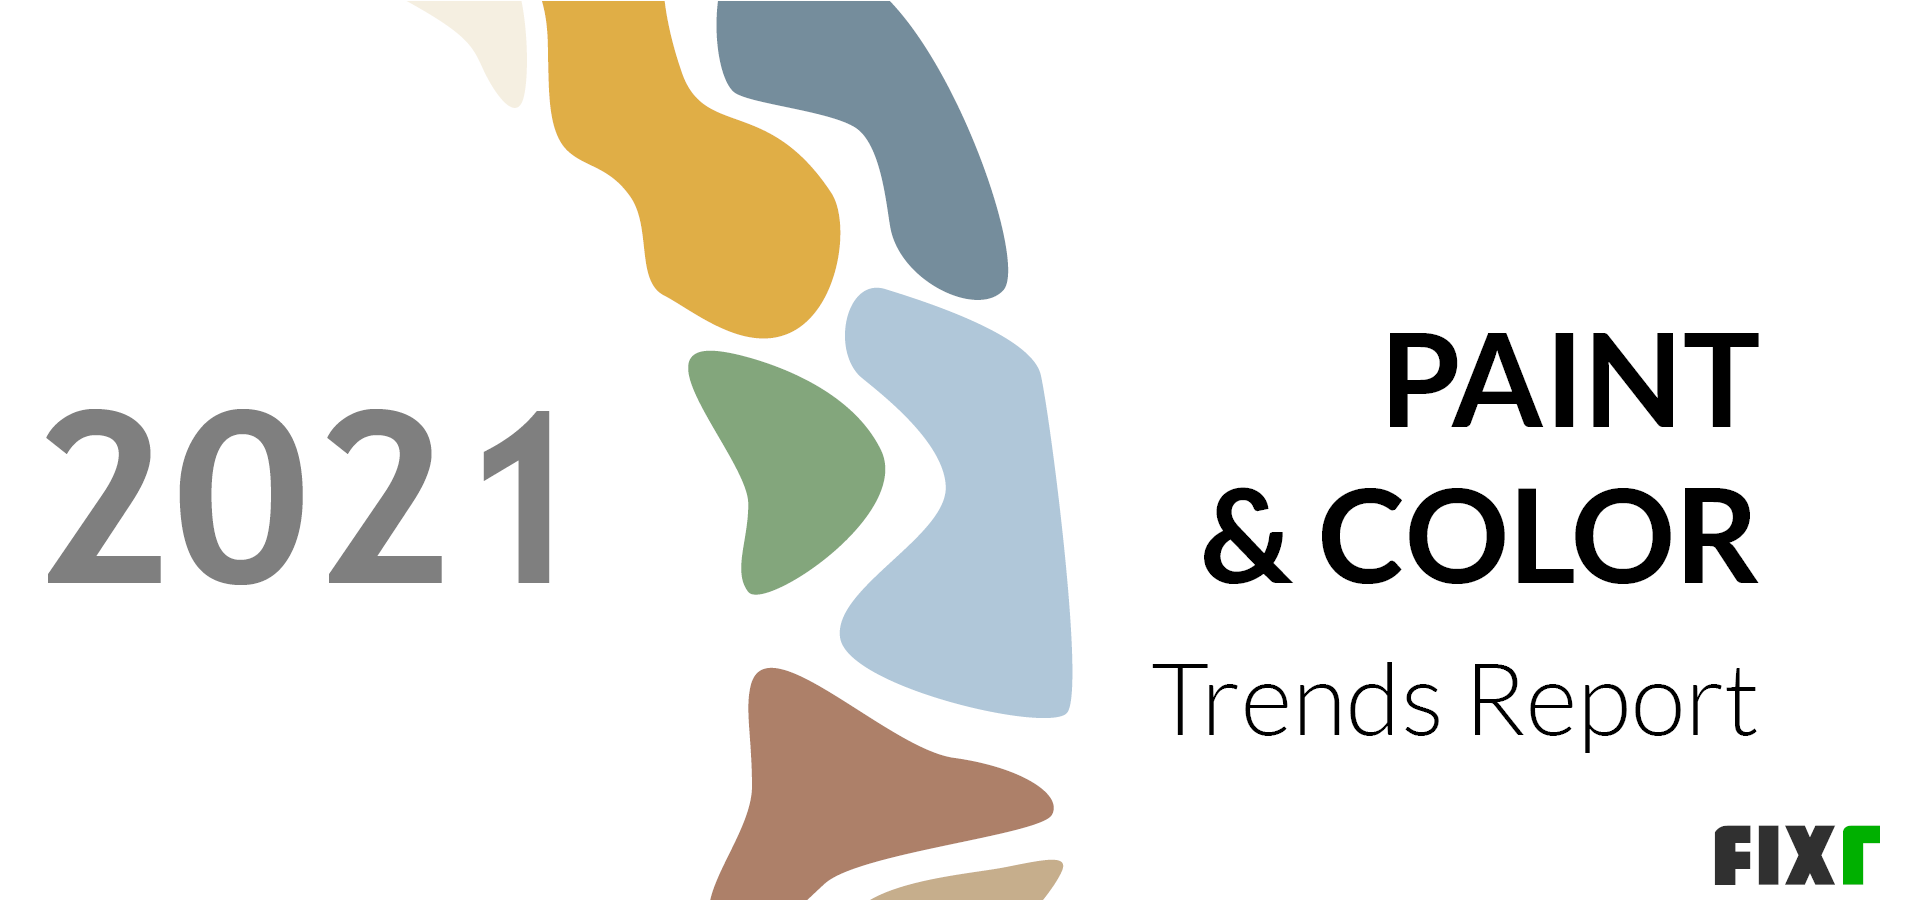 Paint & Color Trends in 2021 - Fixr.com